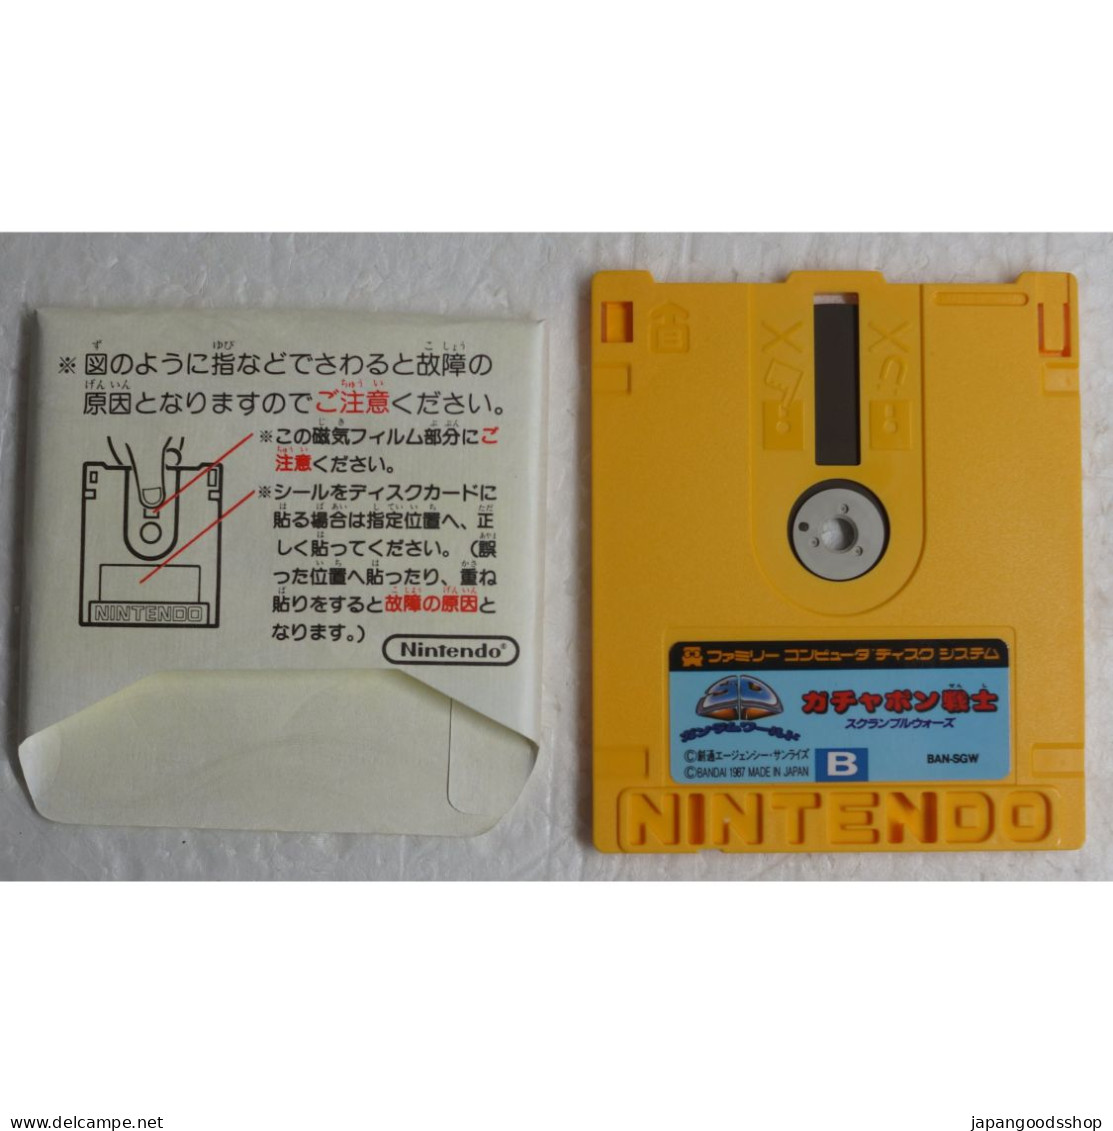 Gachapon Senshi Scramble War BAN-SGW Famicom Disk System Game